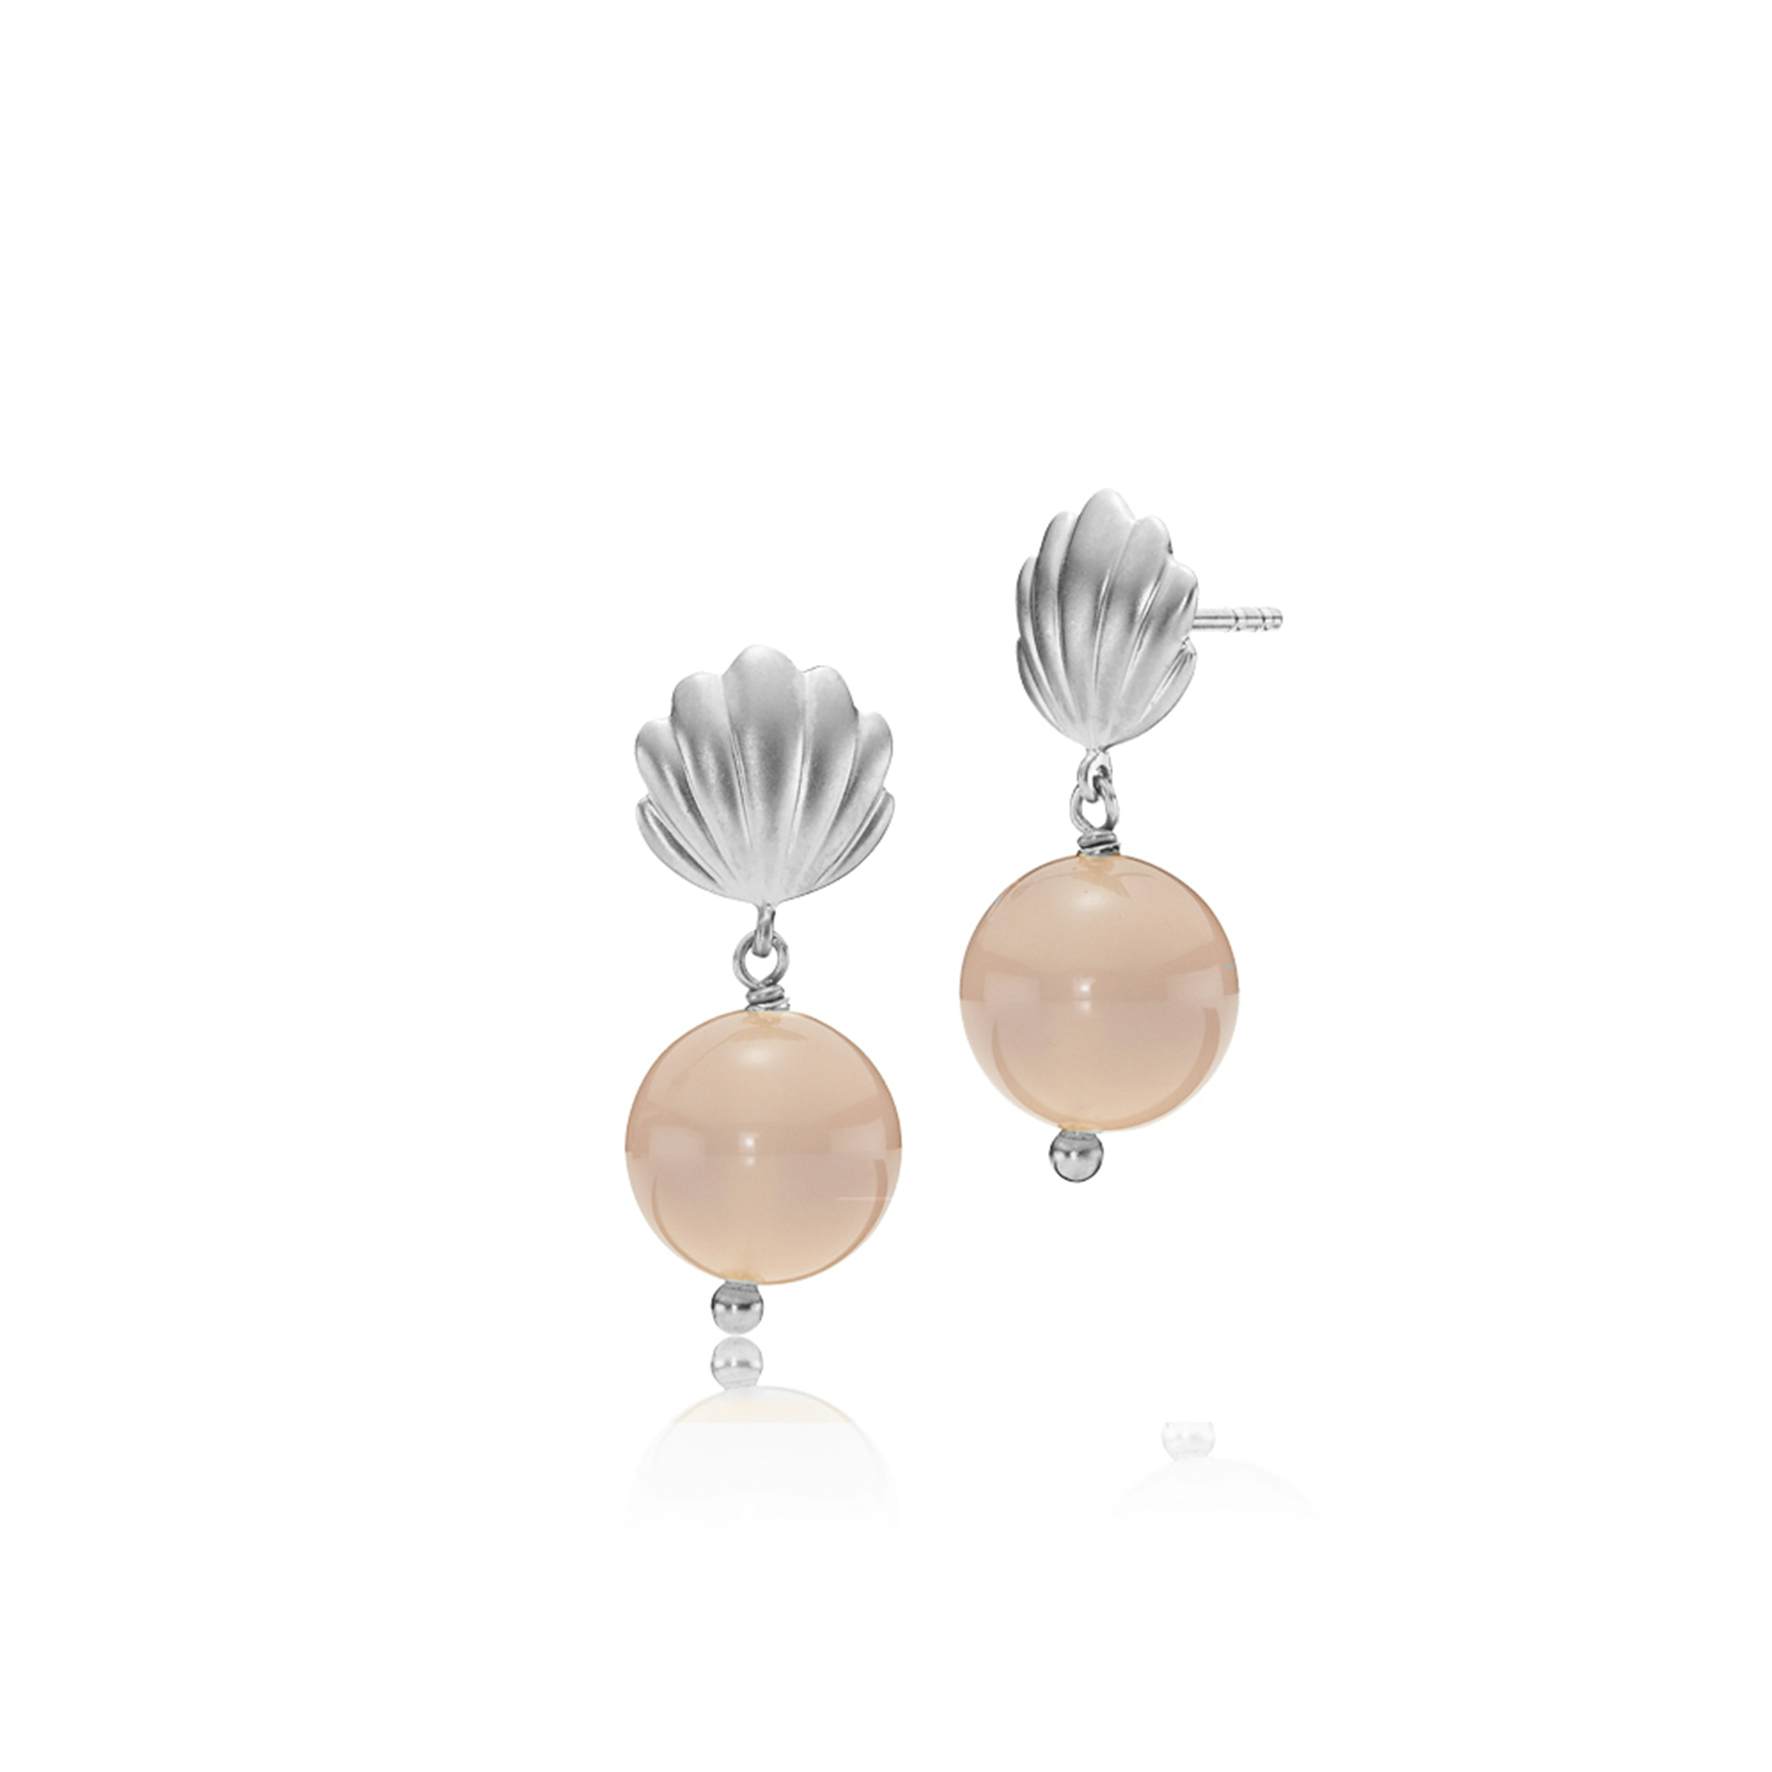 Isabella Pink Earrings från Izabel Camille i Silver Sterling 925